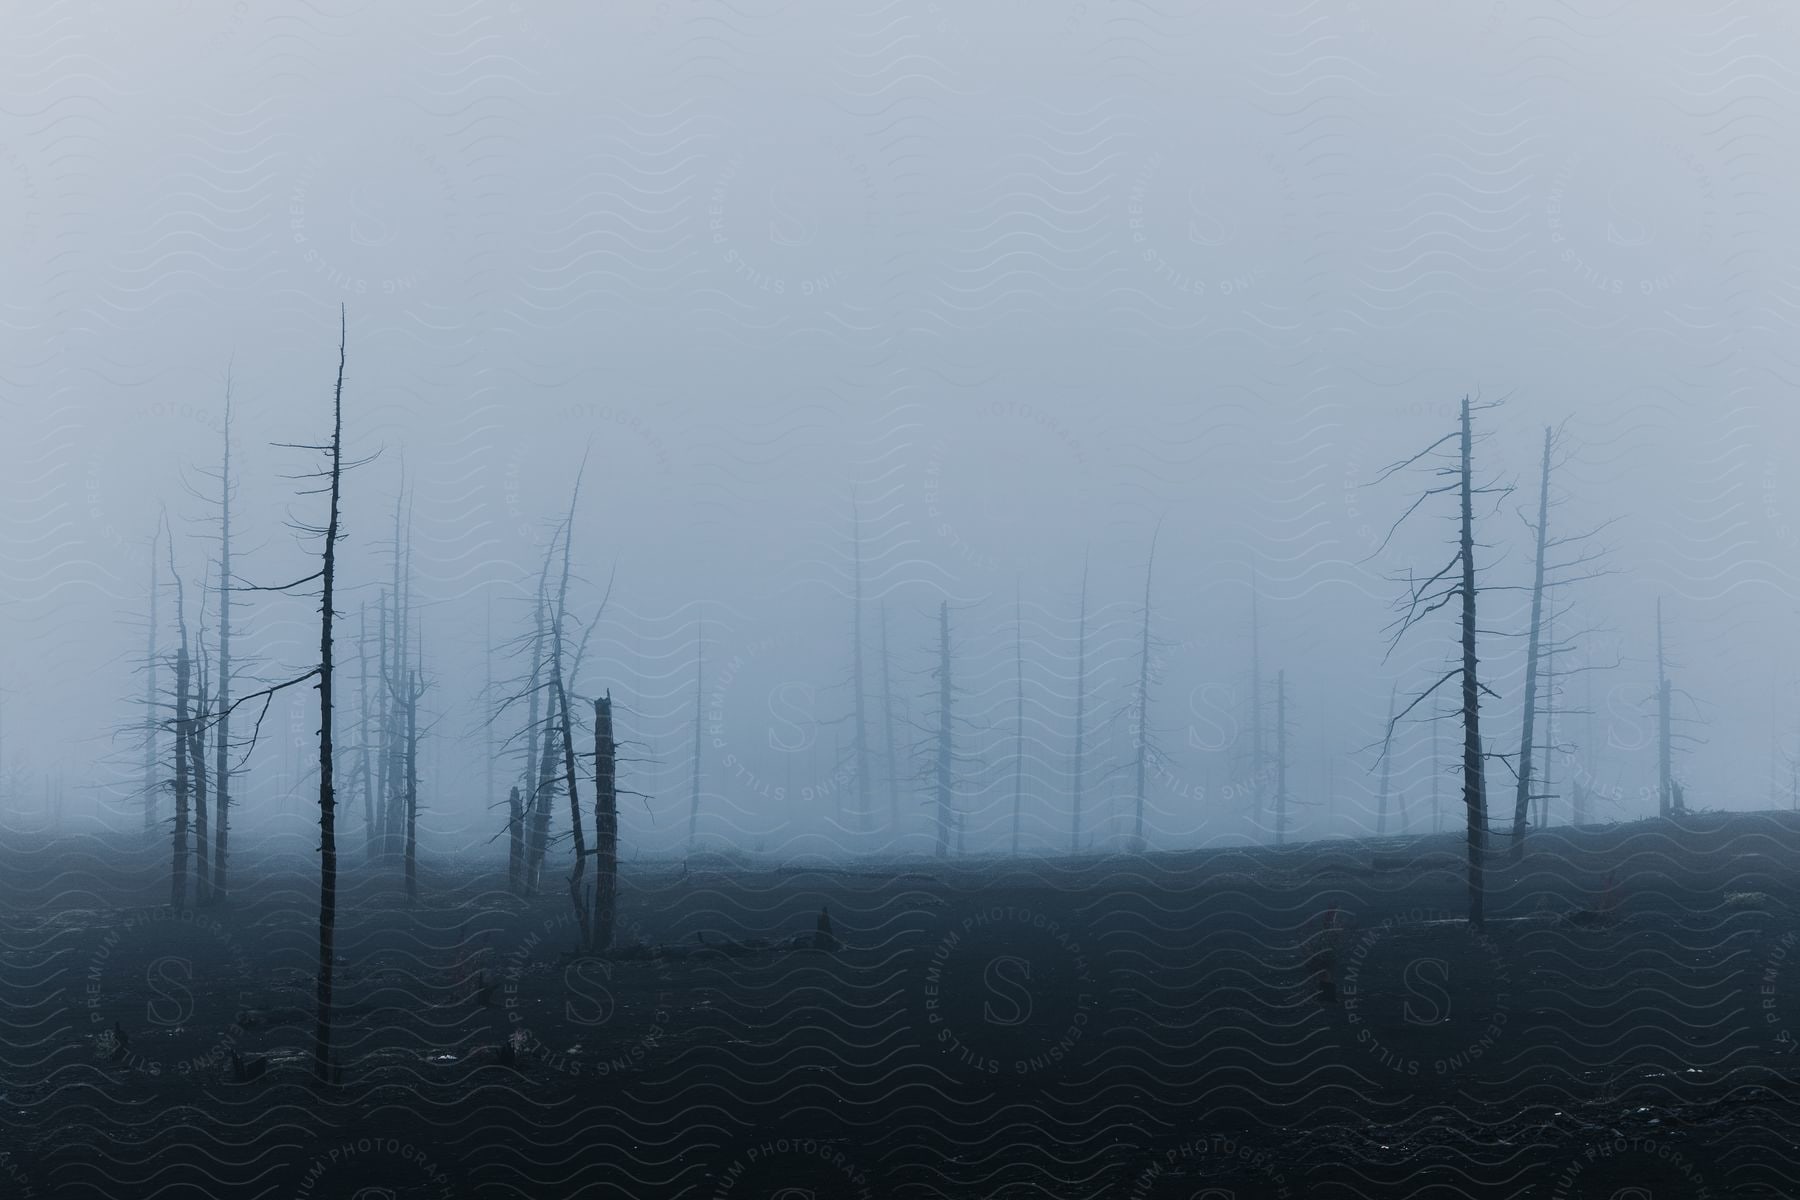 Burnt dead trees with heavy fog hiding distant trees